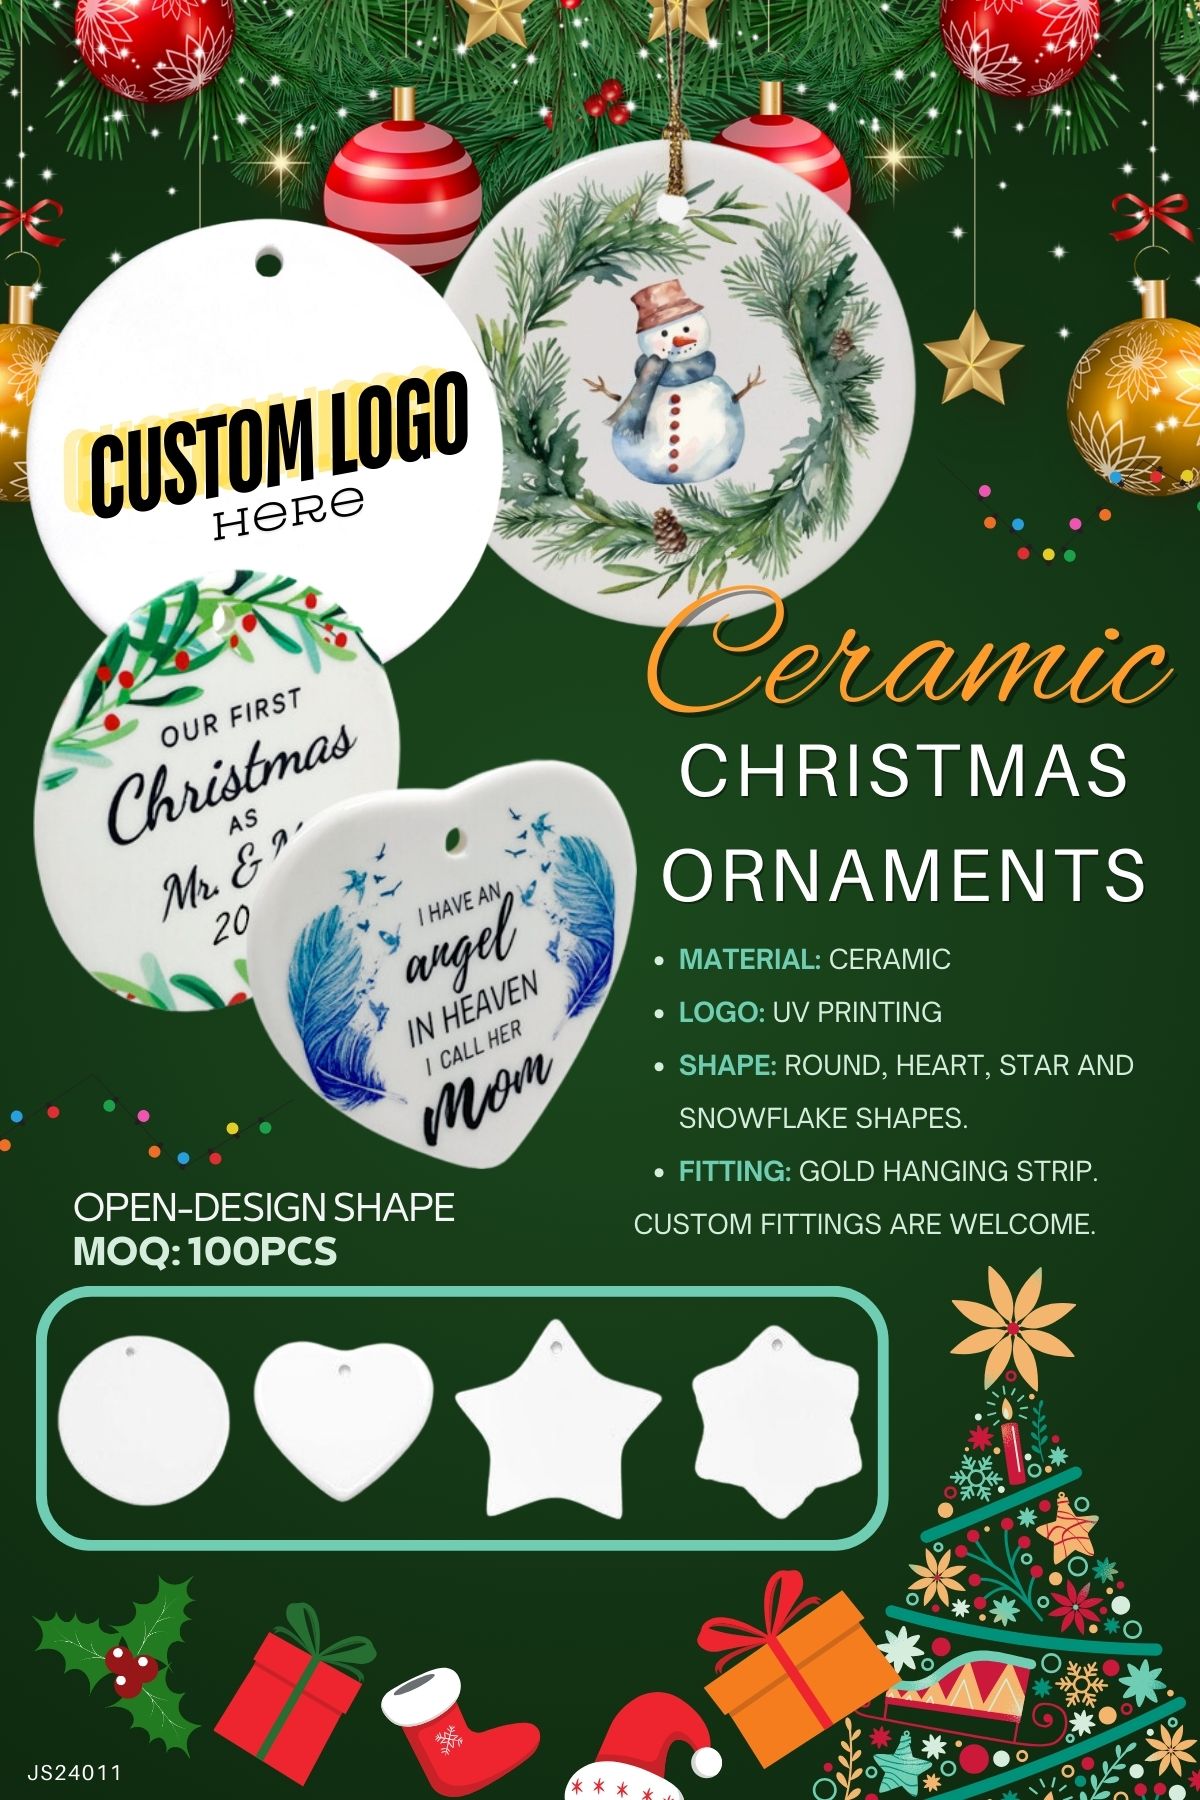 custom logo hanging ceramic ornaments